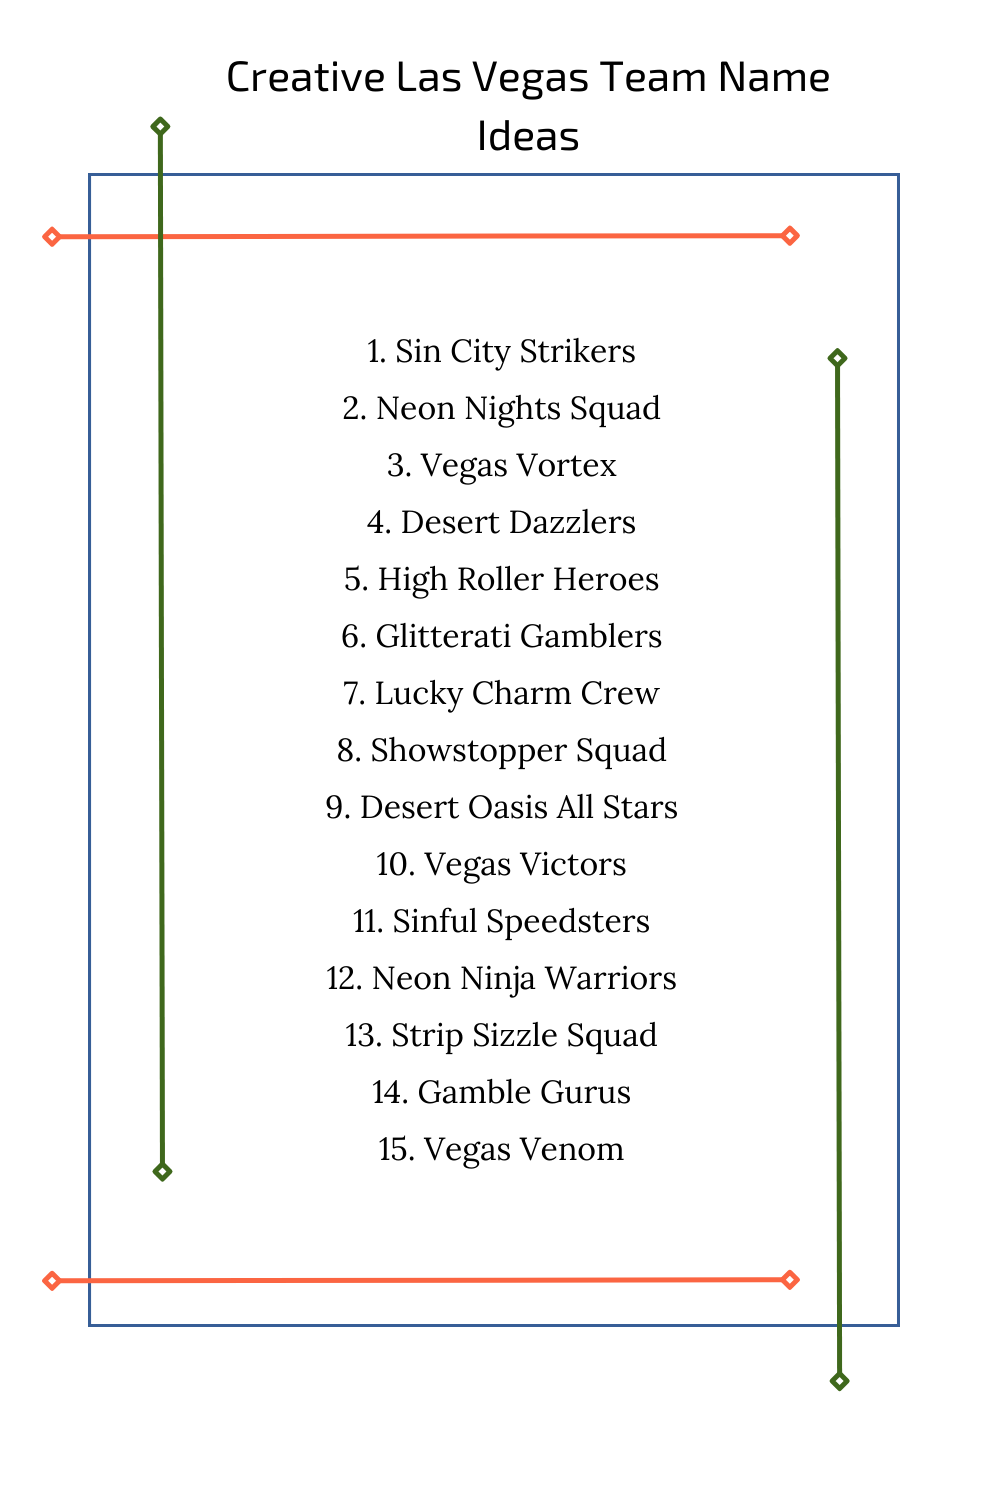 Creative Las Vegas Team Name Ideas